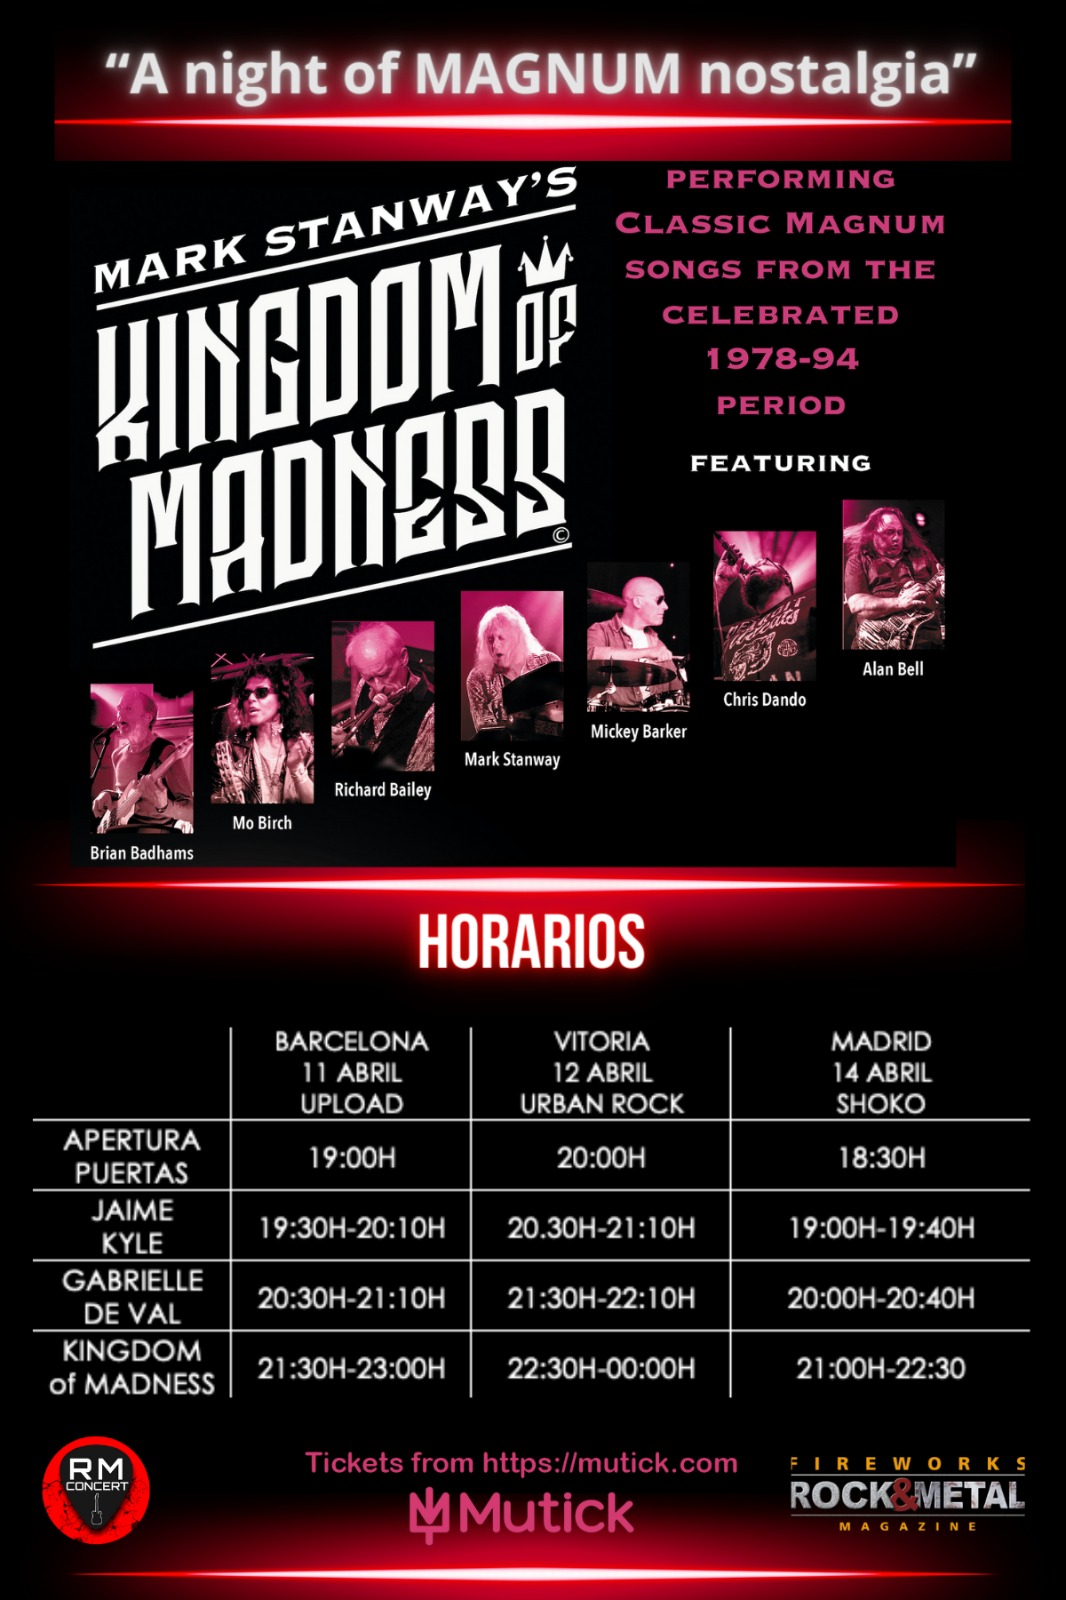 KINGDOM of MADNESS performing Magnum en Barcelona   - Mutick